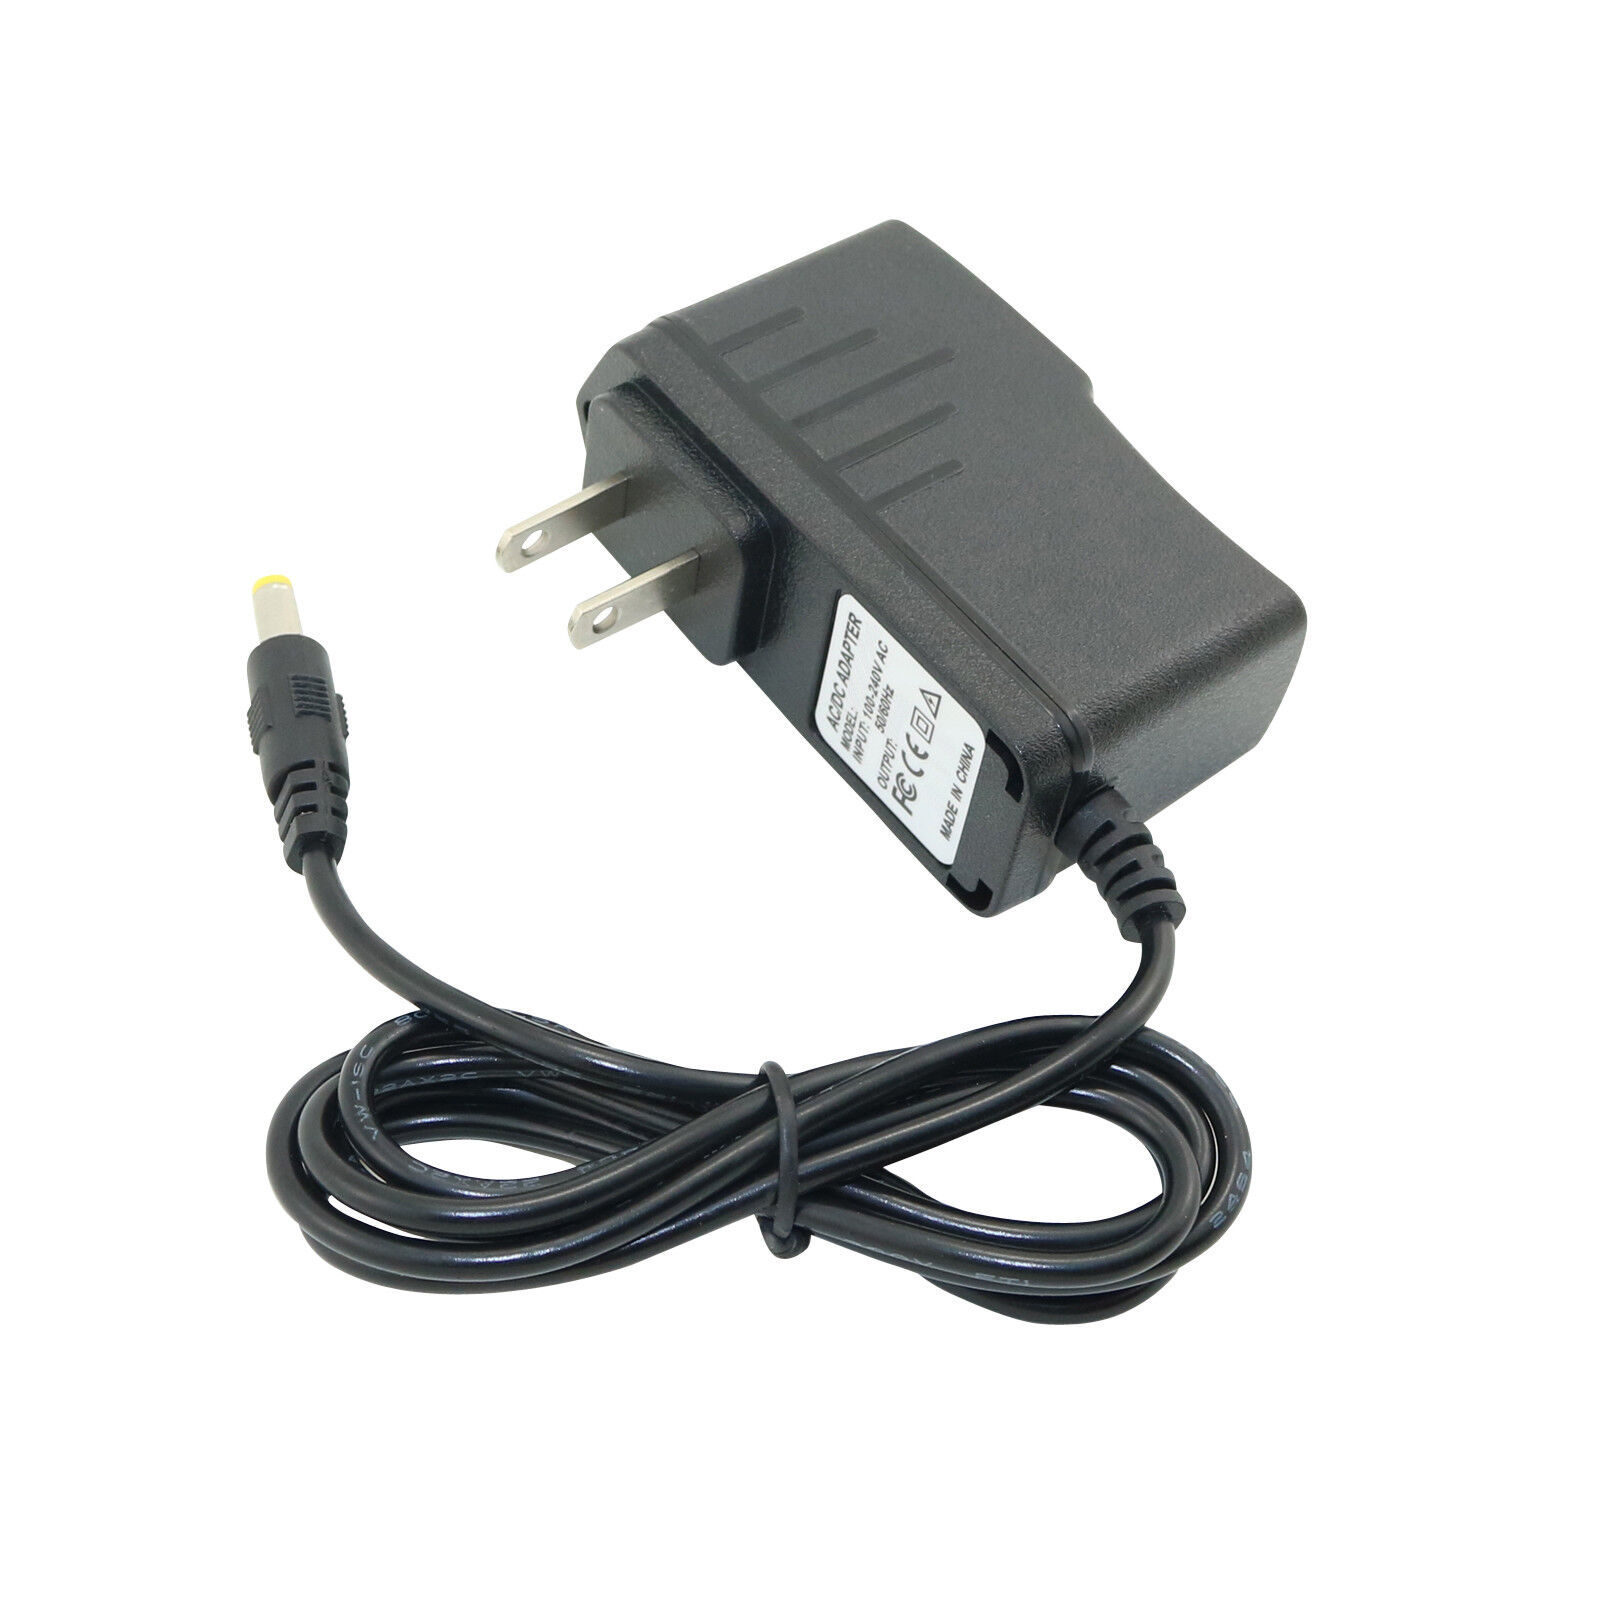 AC Adapter Charger For Motorola MBP41 MBP41BU MBP41PU Digital Video Baby Monitor - $19.99